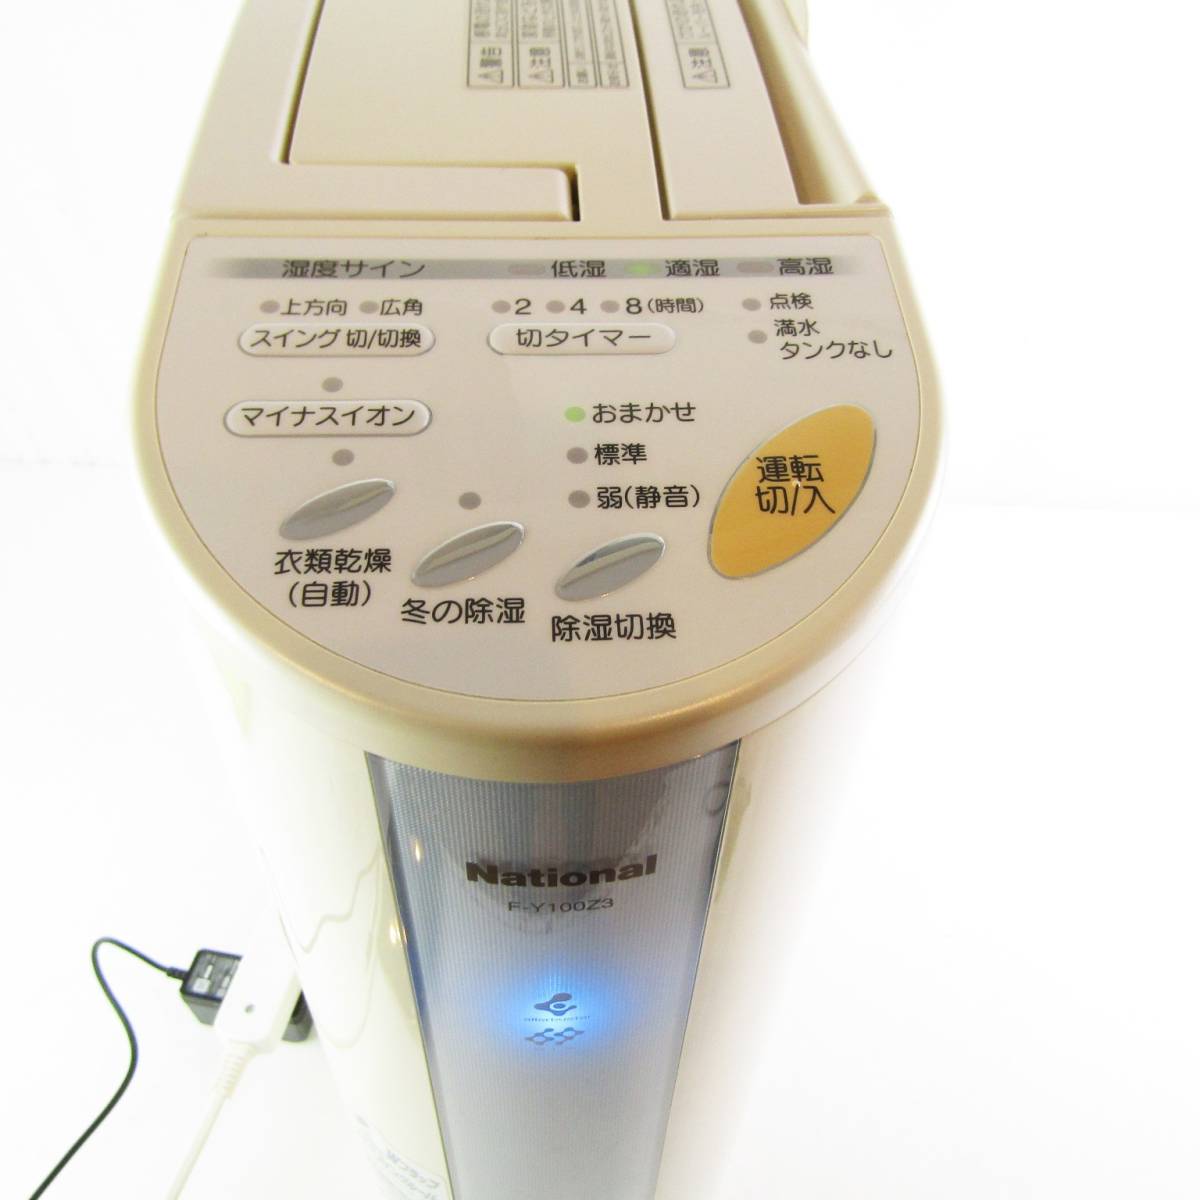 QB6688 ナショナル National 除湿乾燥機 衣類乾燥機 F-Y100Z3 2004年製 デシカント方式 家電 中古 福井 リサイクル_画像5